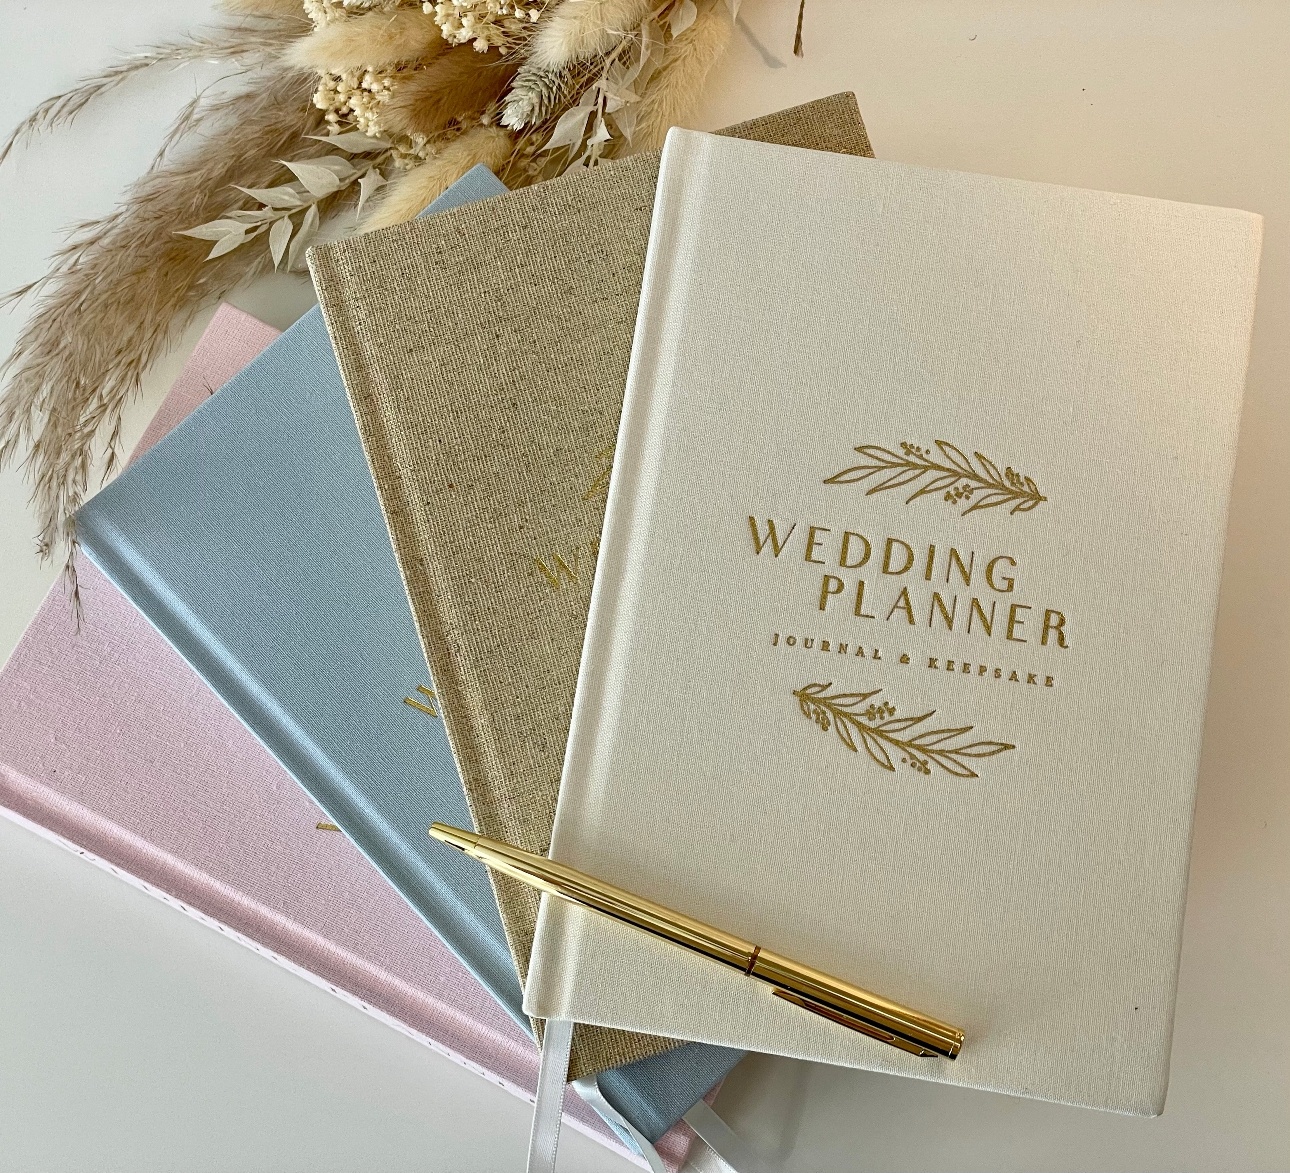 New Wedding Planner Journal top of cream planner with gold pen